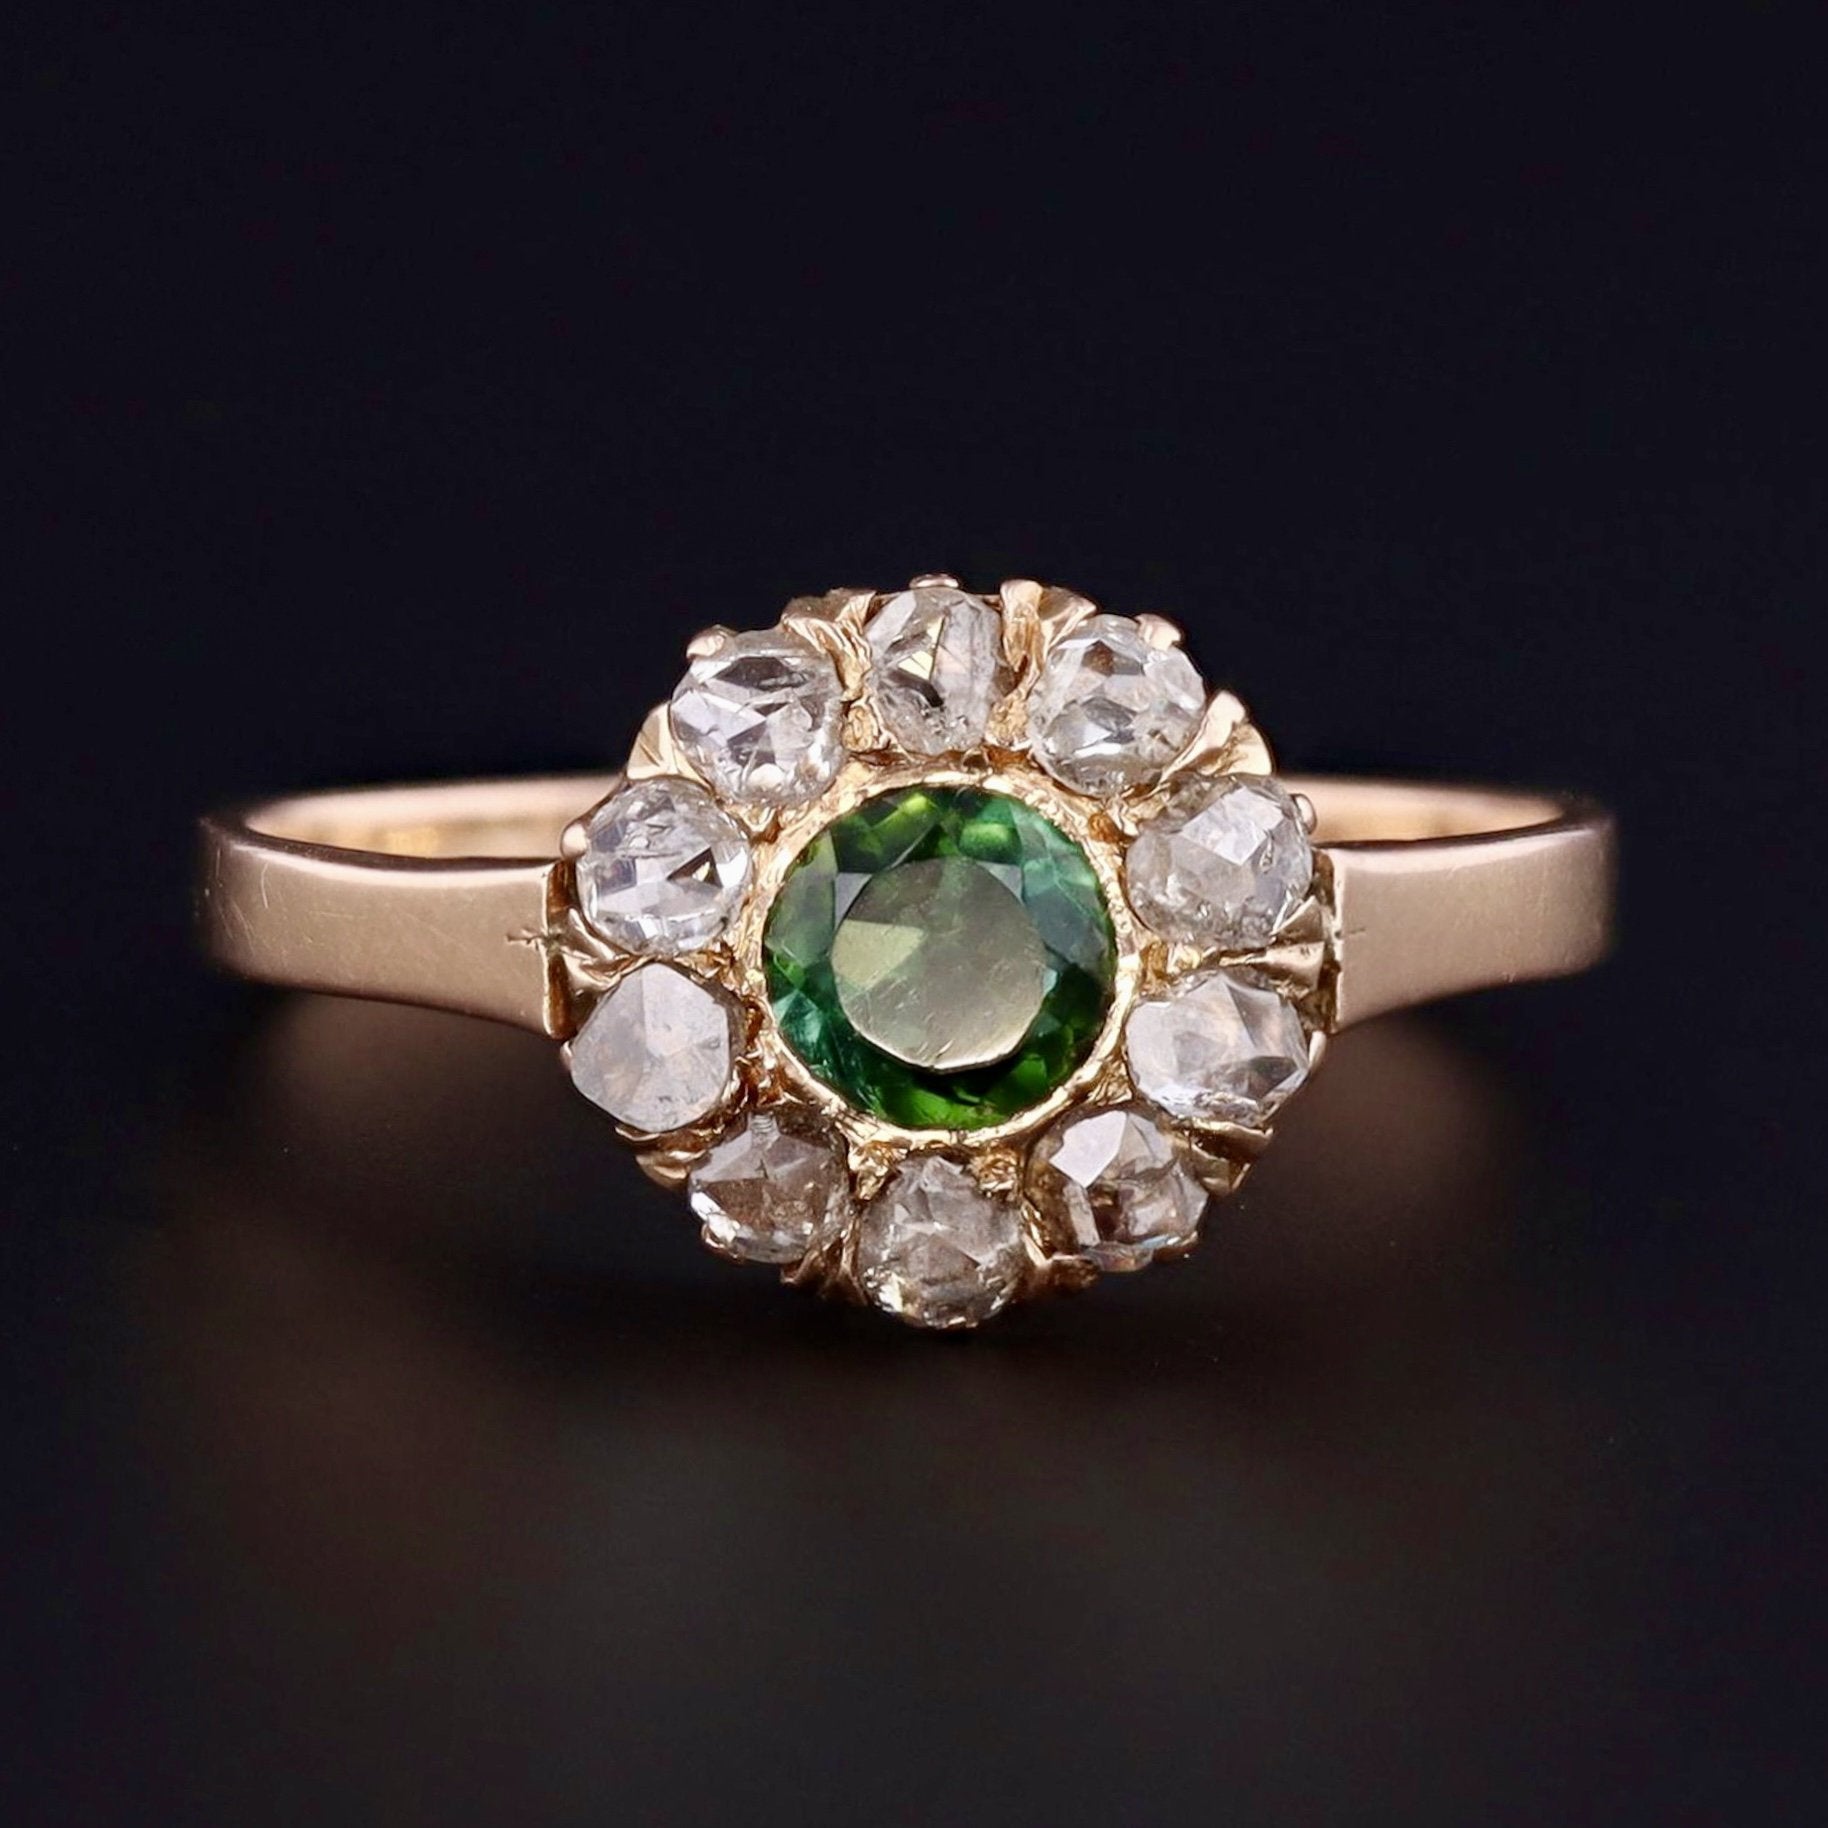 Green Tourmaline & Diamond Ring | Antique Ring | Halo Ring | Tourmaline Ring | 14k Gold Antique Ring